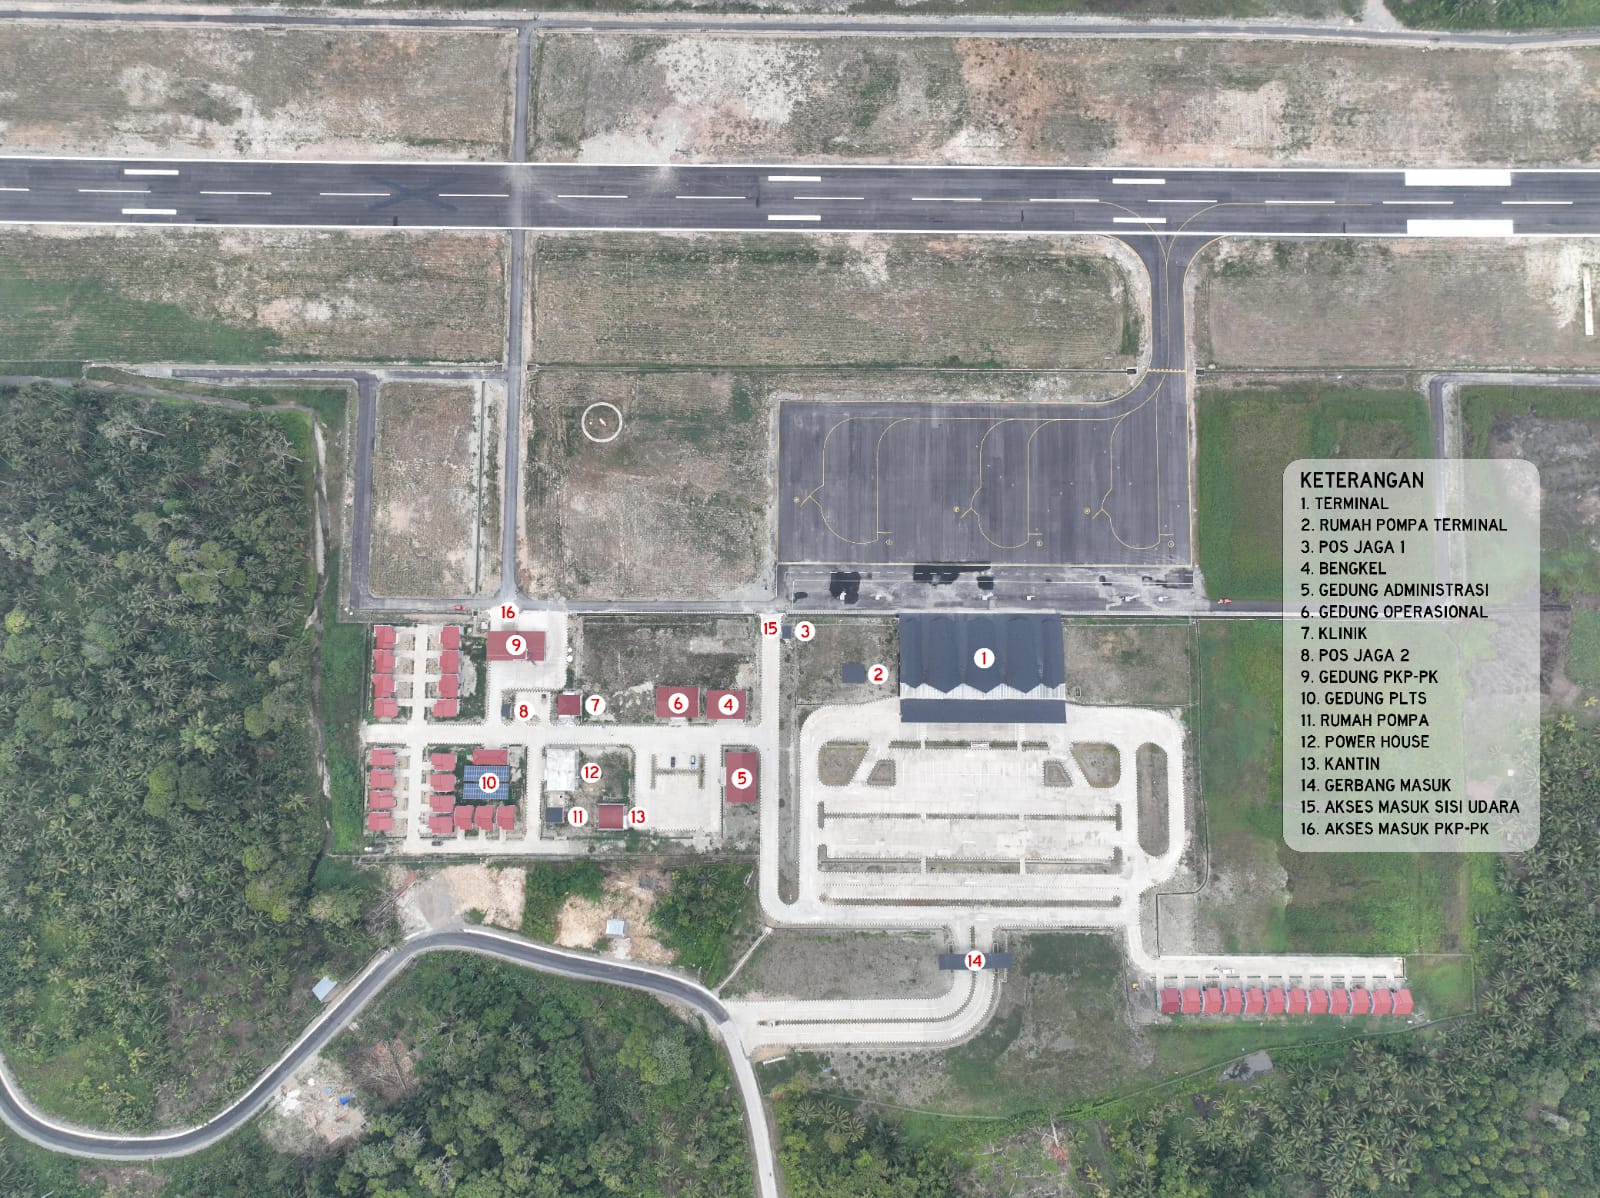 Gambar Peta Bandara Layout Bandara